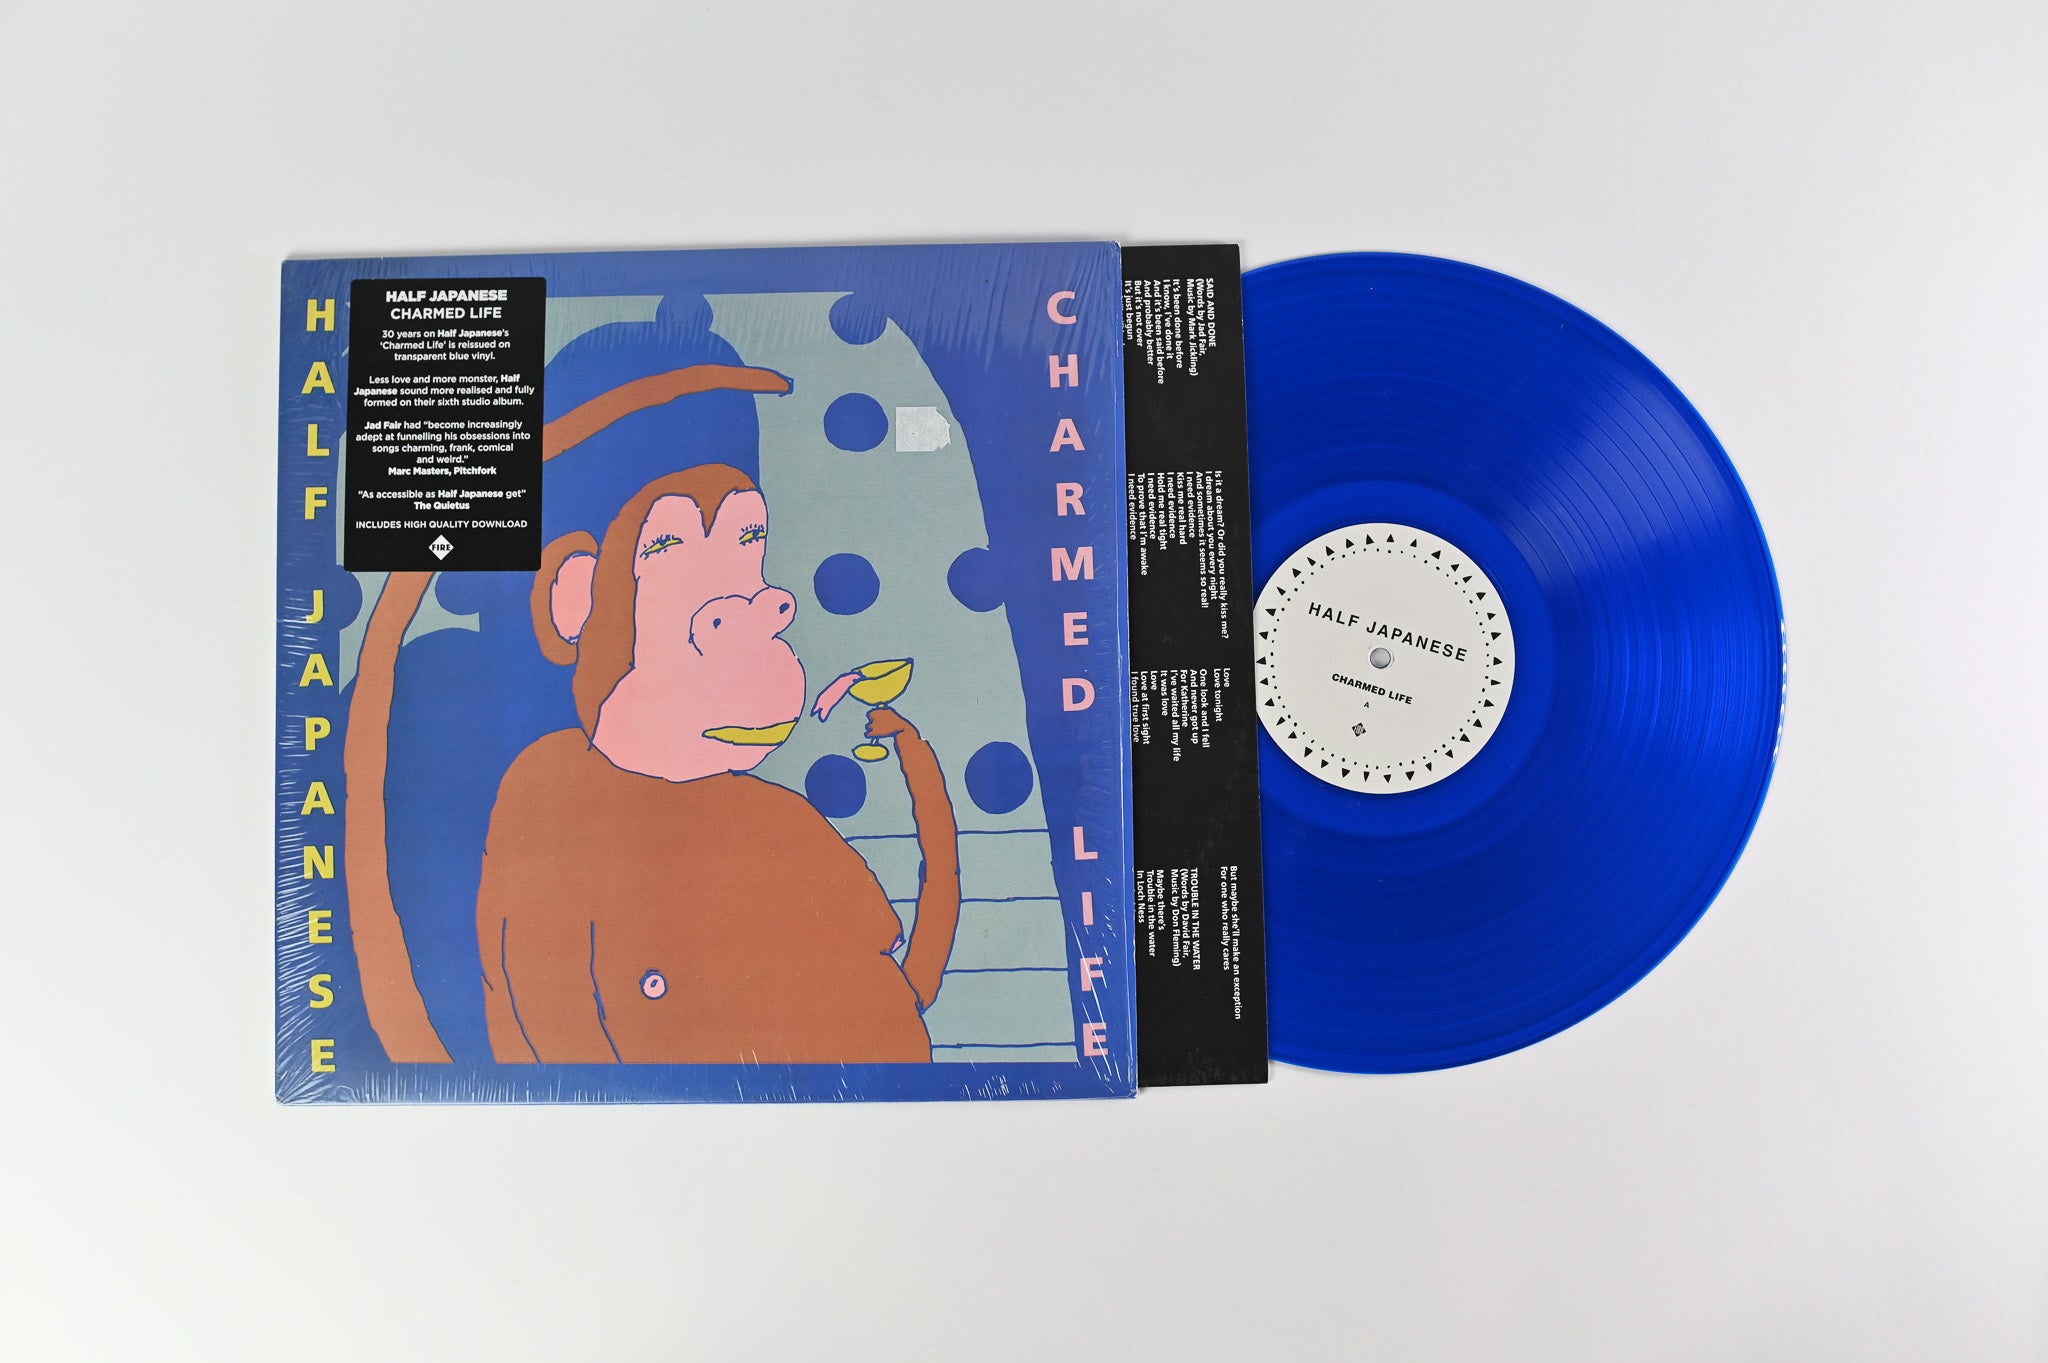 1/2 Japanese - Charmed Life Reissue on Fire Records Blue Translucent Vinyl